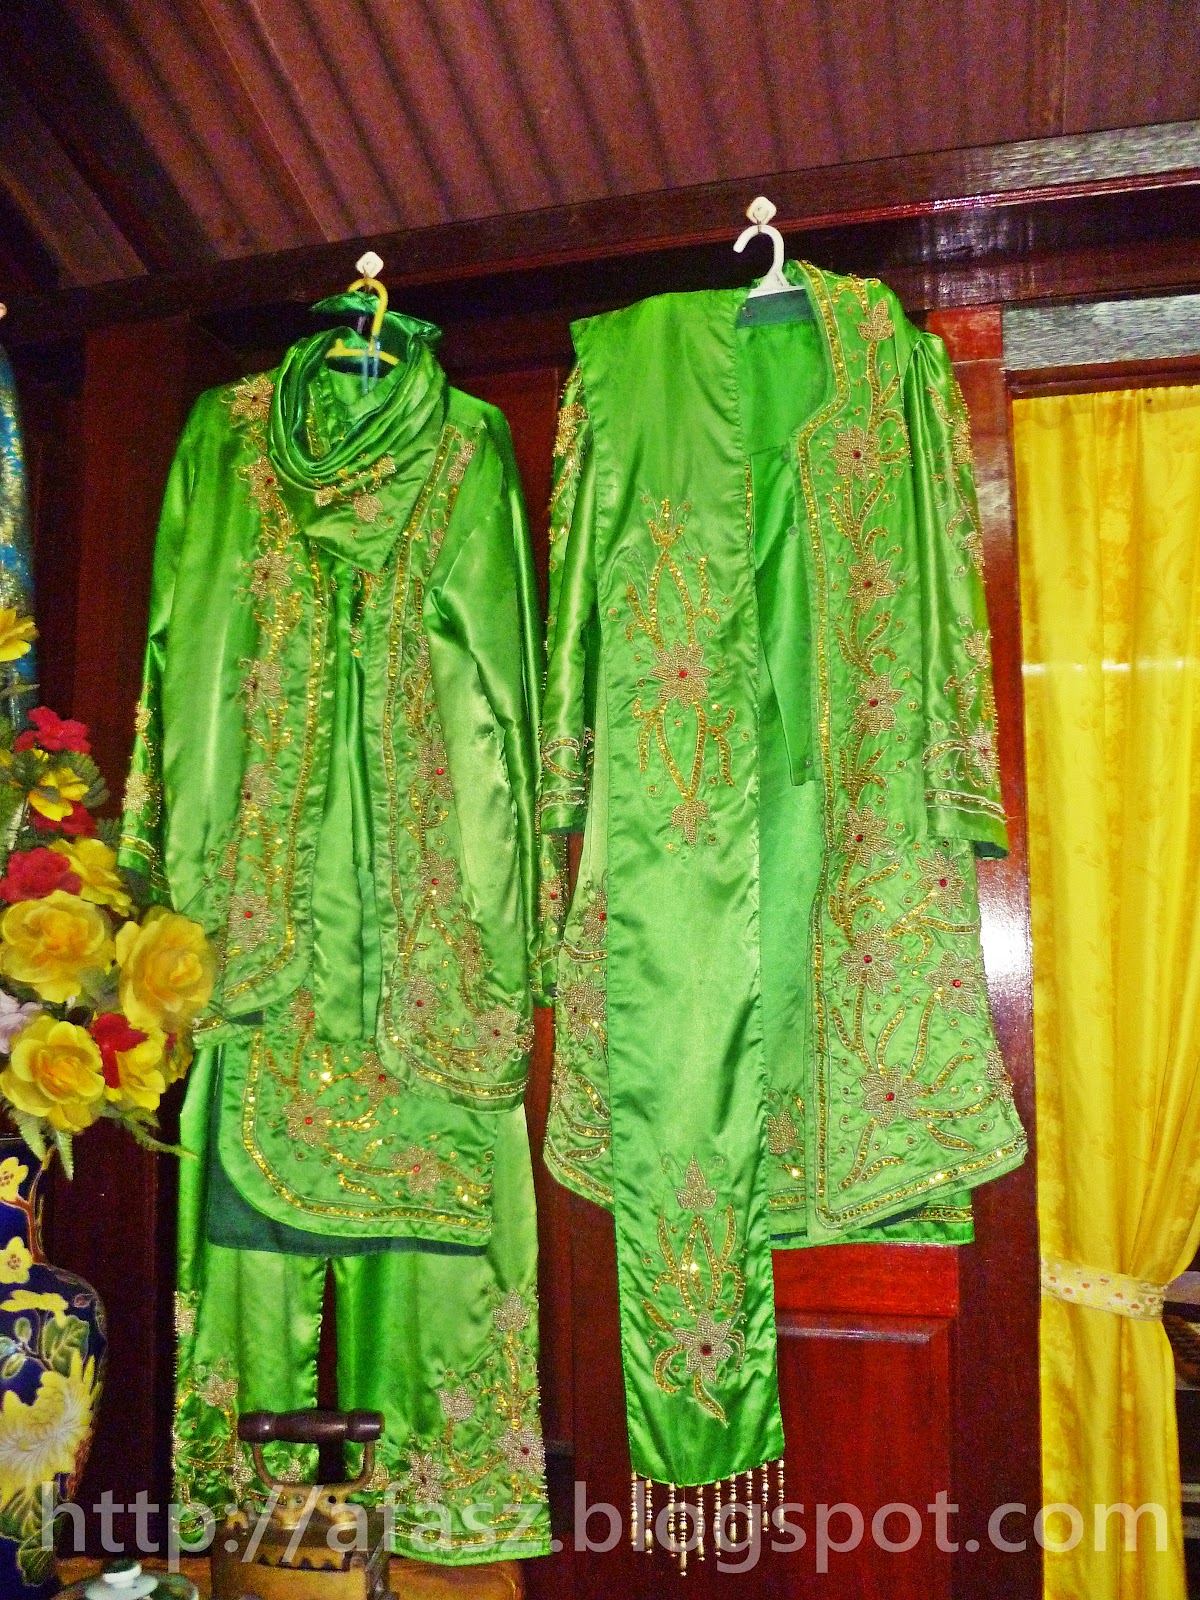 Baju pengantin warna hijau turquoise hijau turquoise baju 